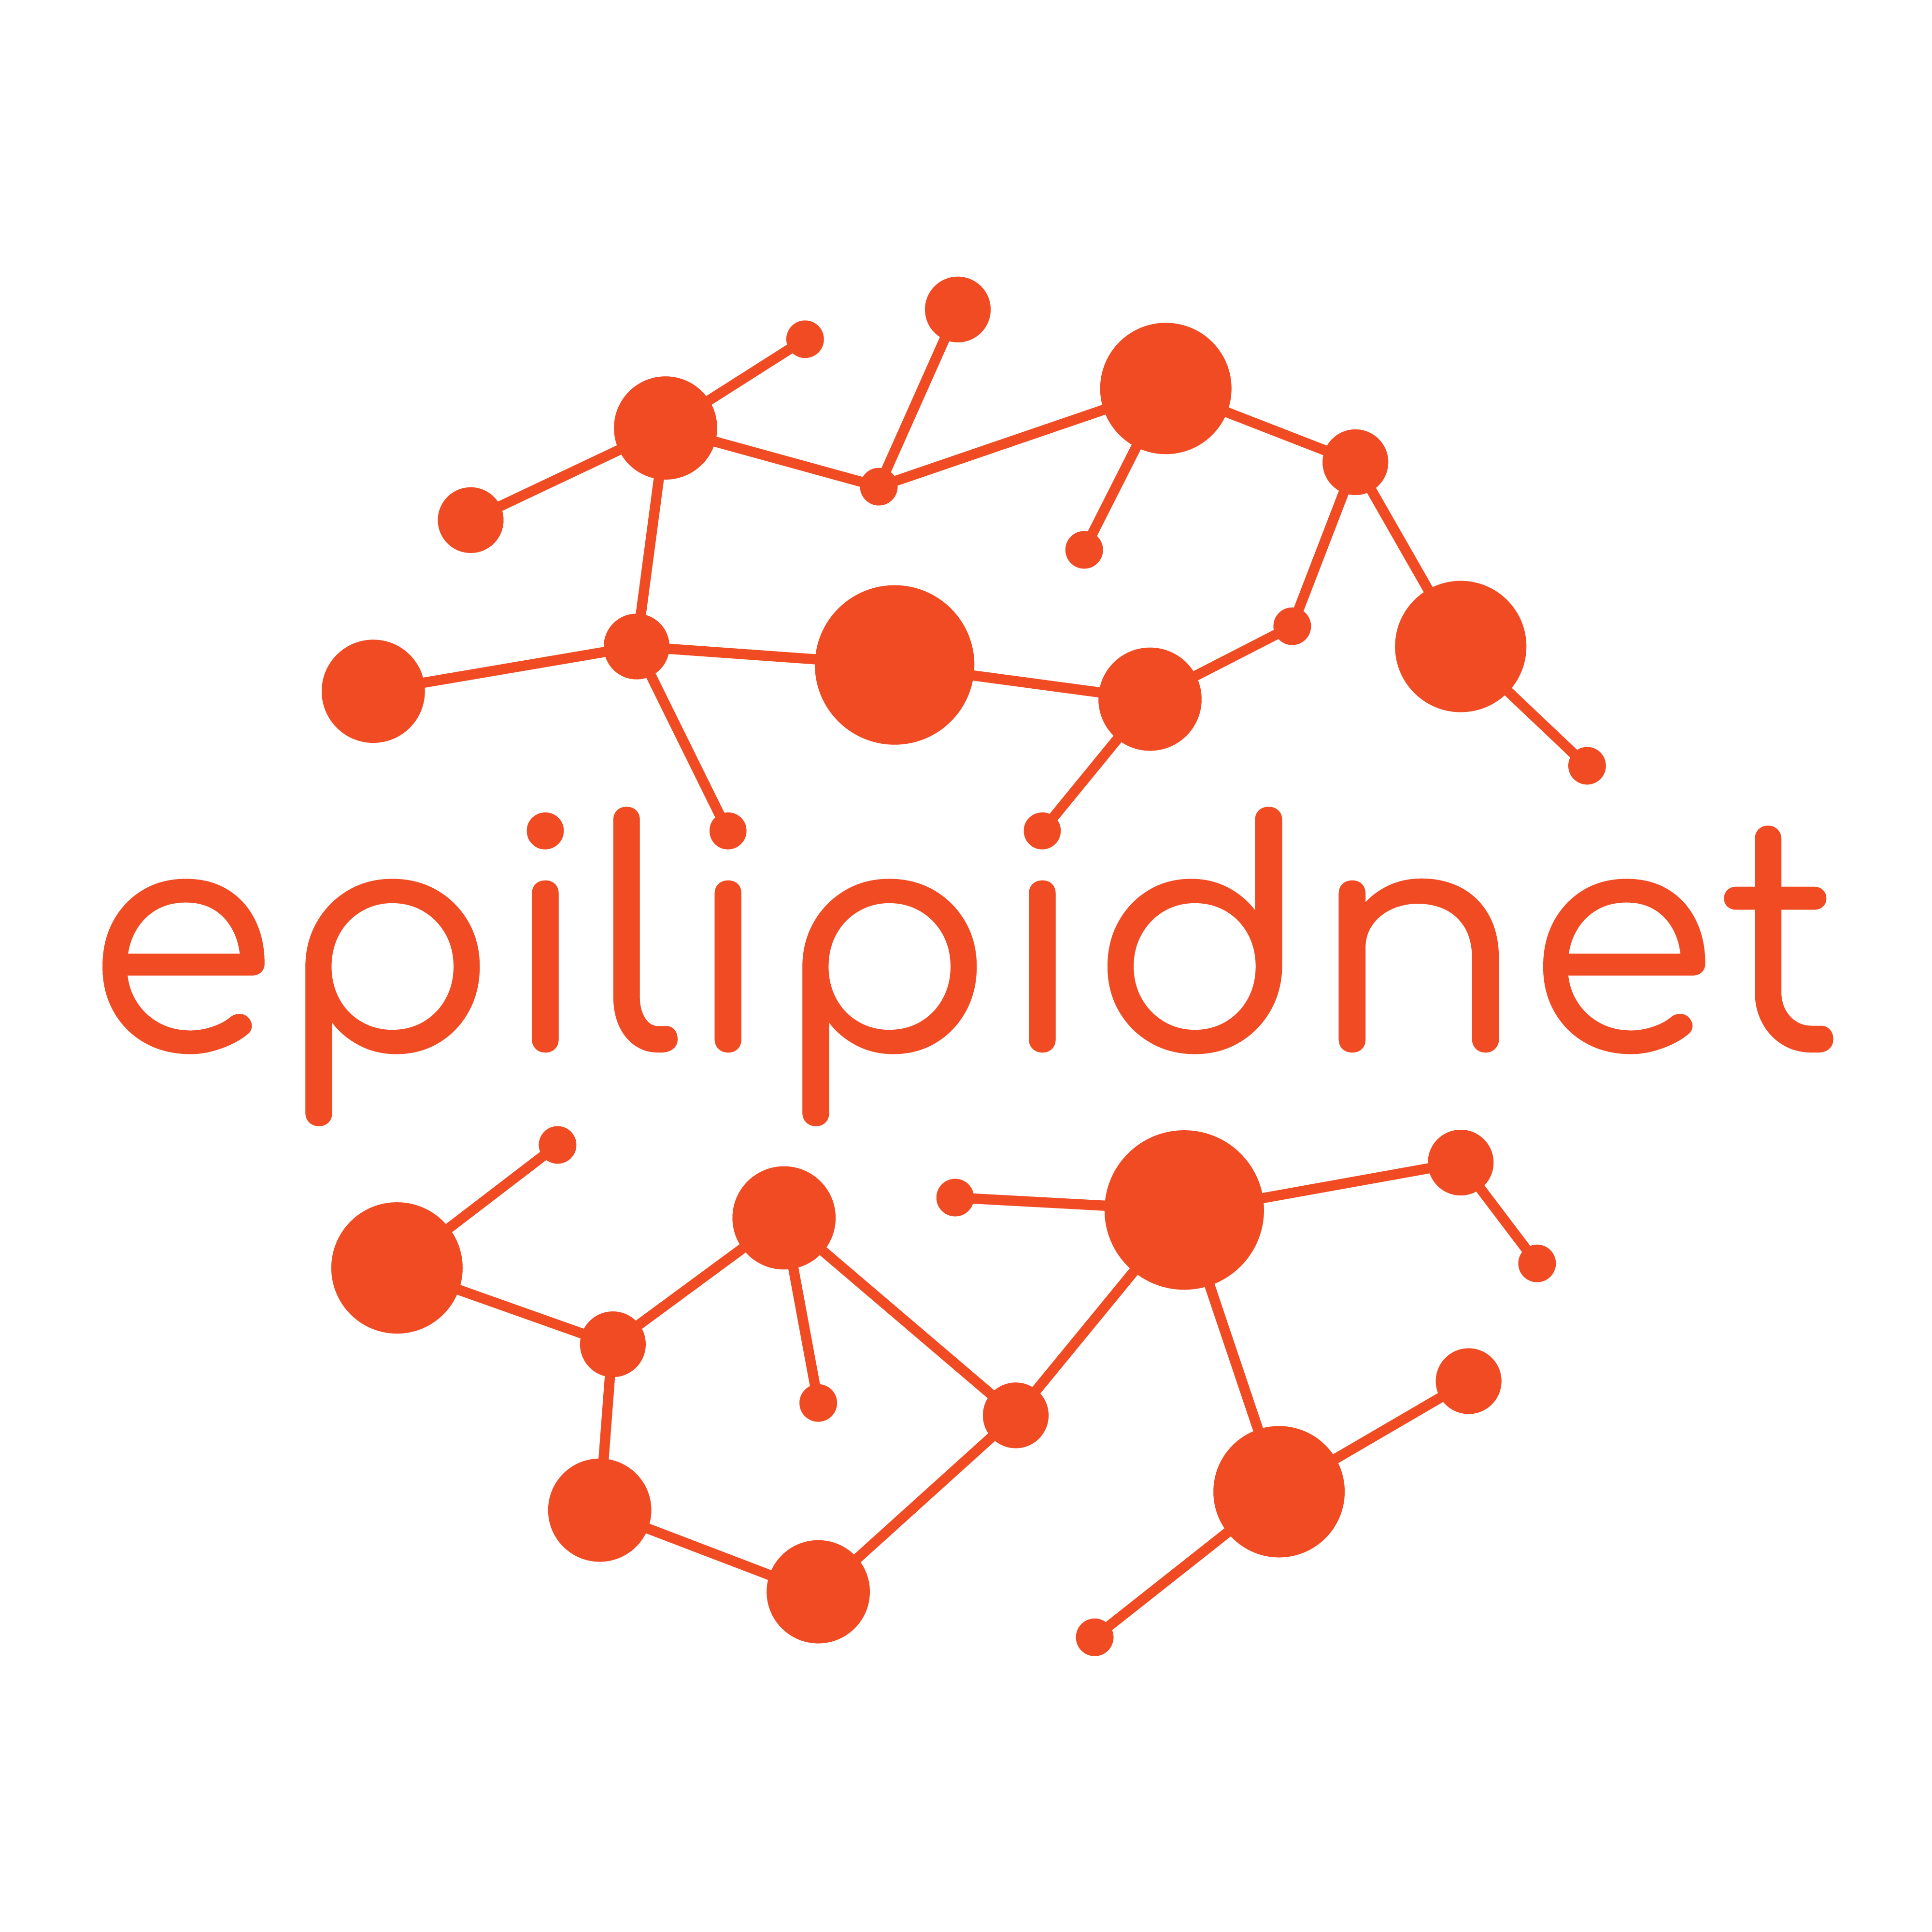 Epilipidnet Logo